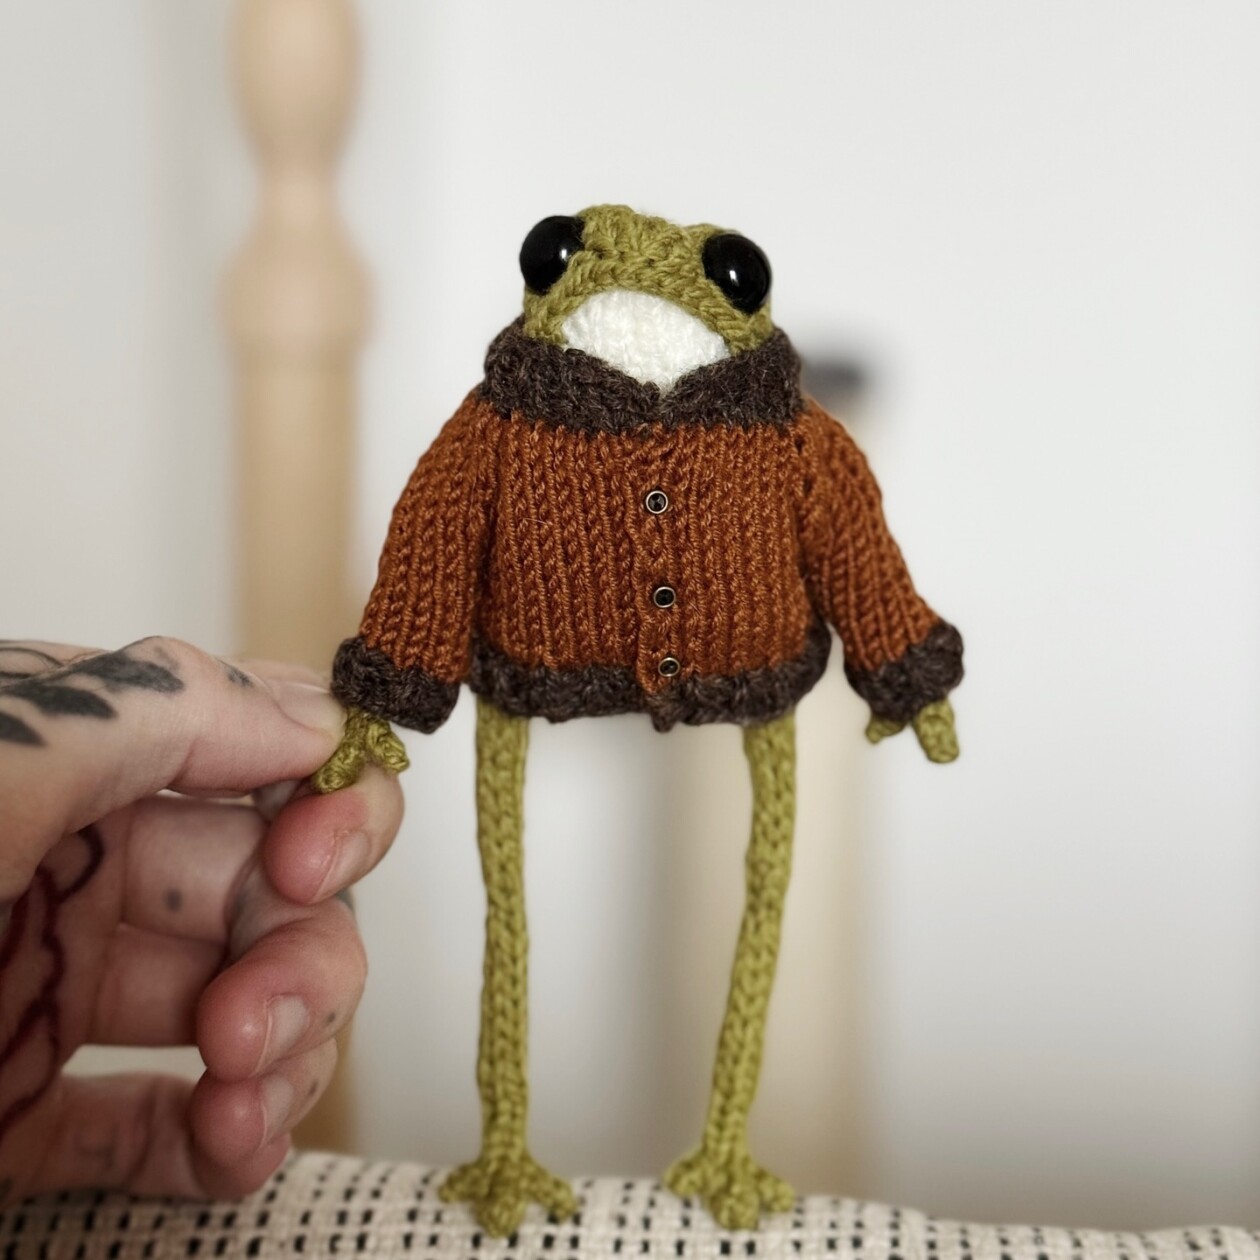 Enchanting Anthropomorphized Frog Crochet Patterns By Elliot (24)